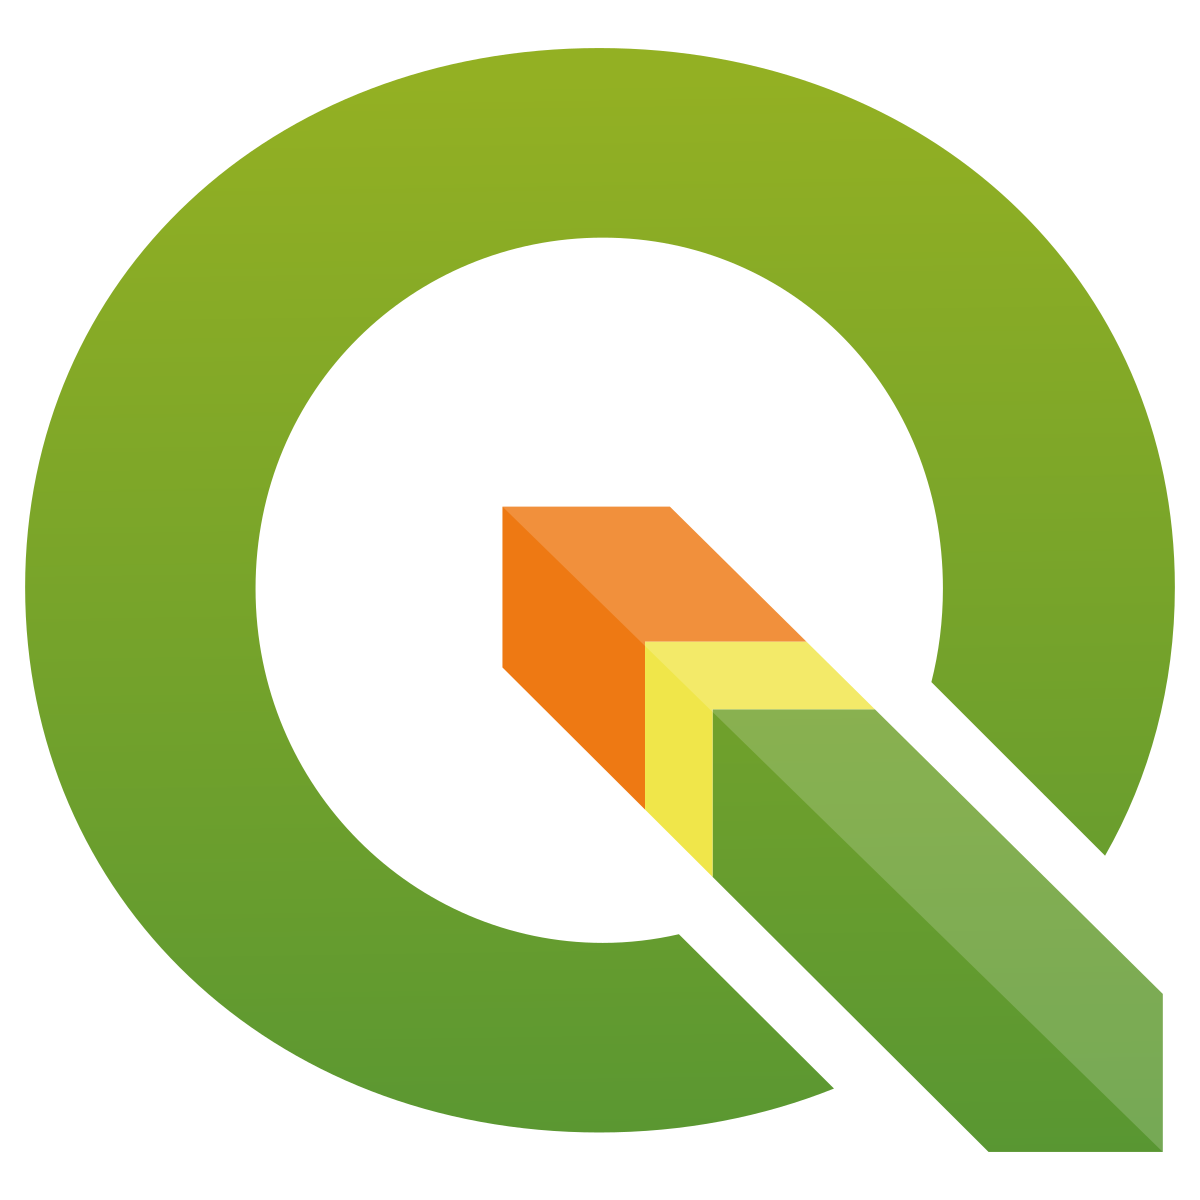 File:QGIS logo new.svg - Wikimedia Commons